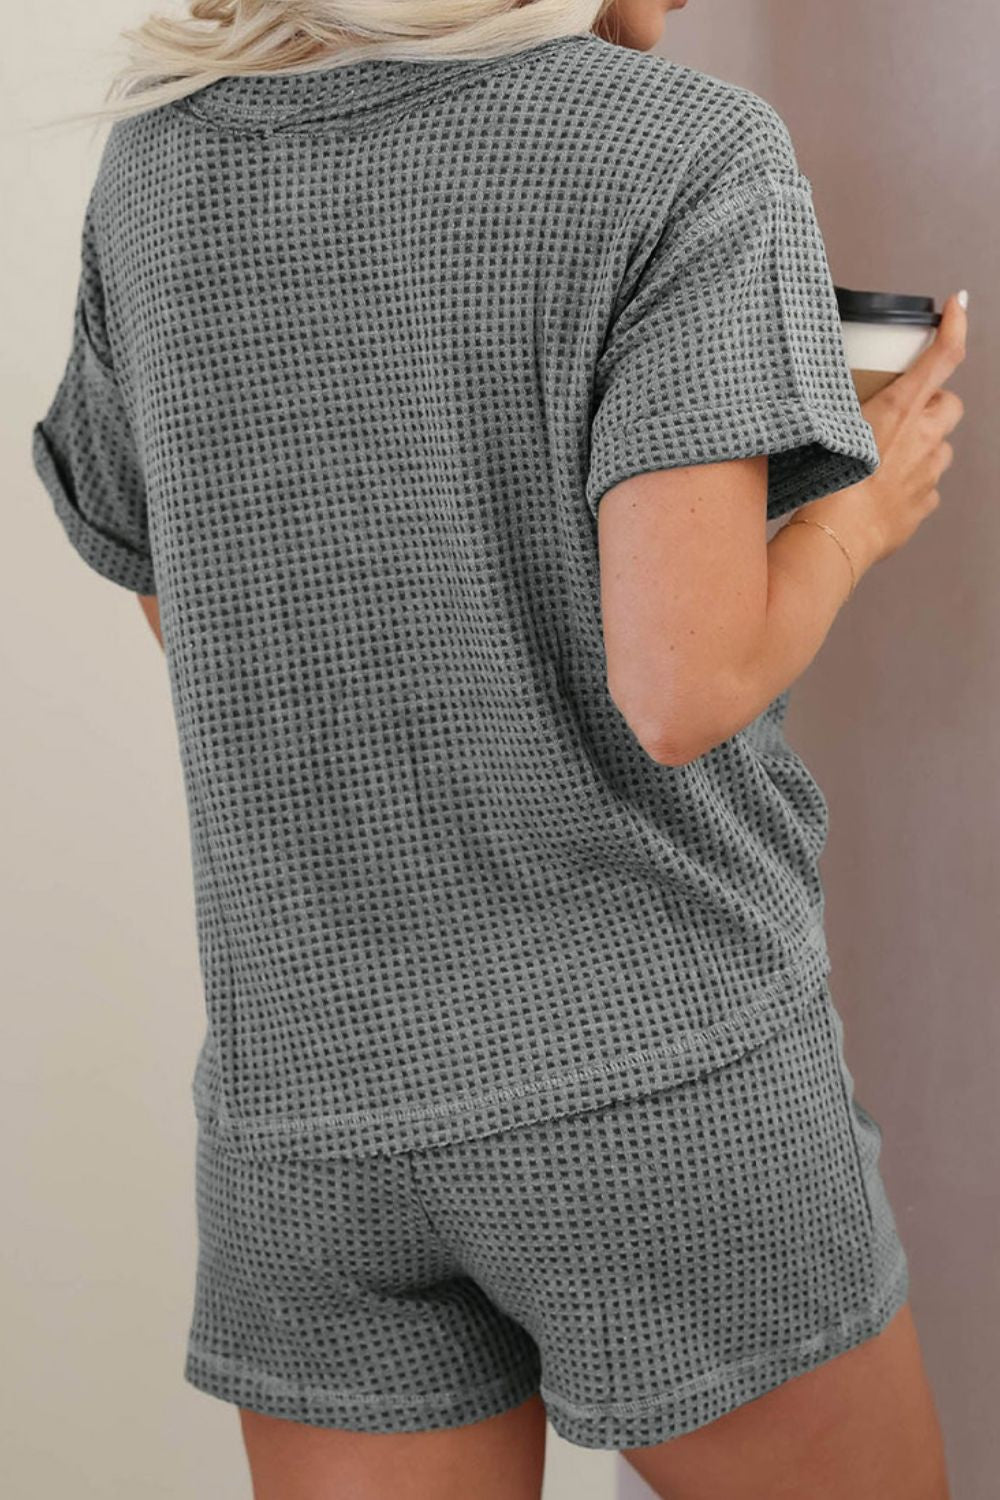 TEEK - Charcoal Waffle-Knit Short Sleeve Shorts Lounge Set SET TEEK Trend   